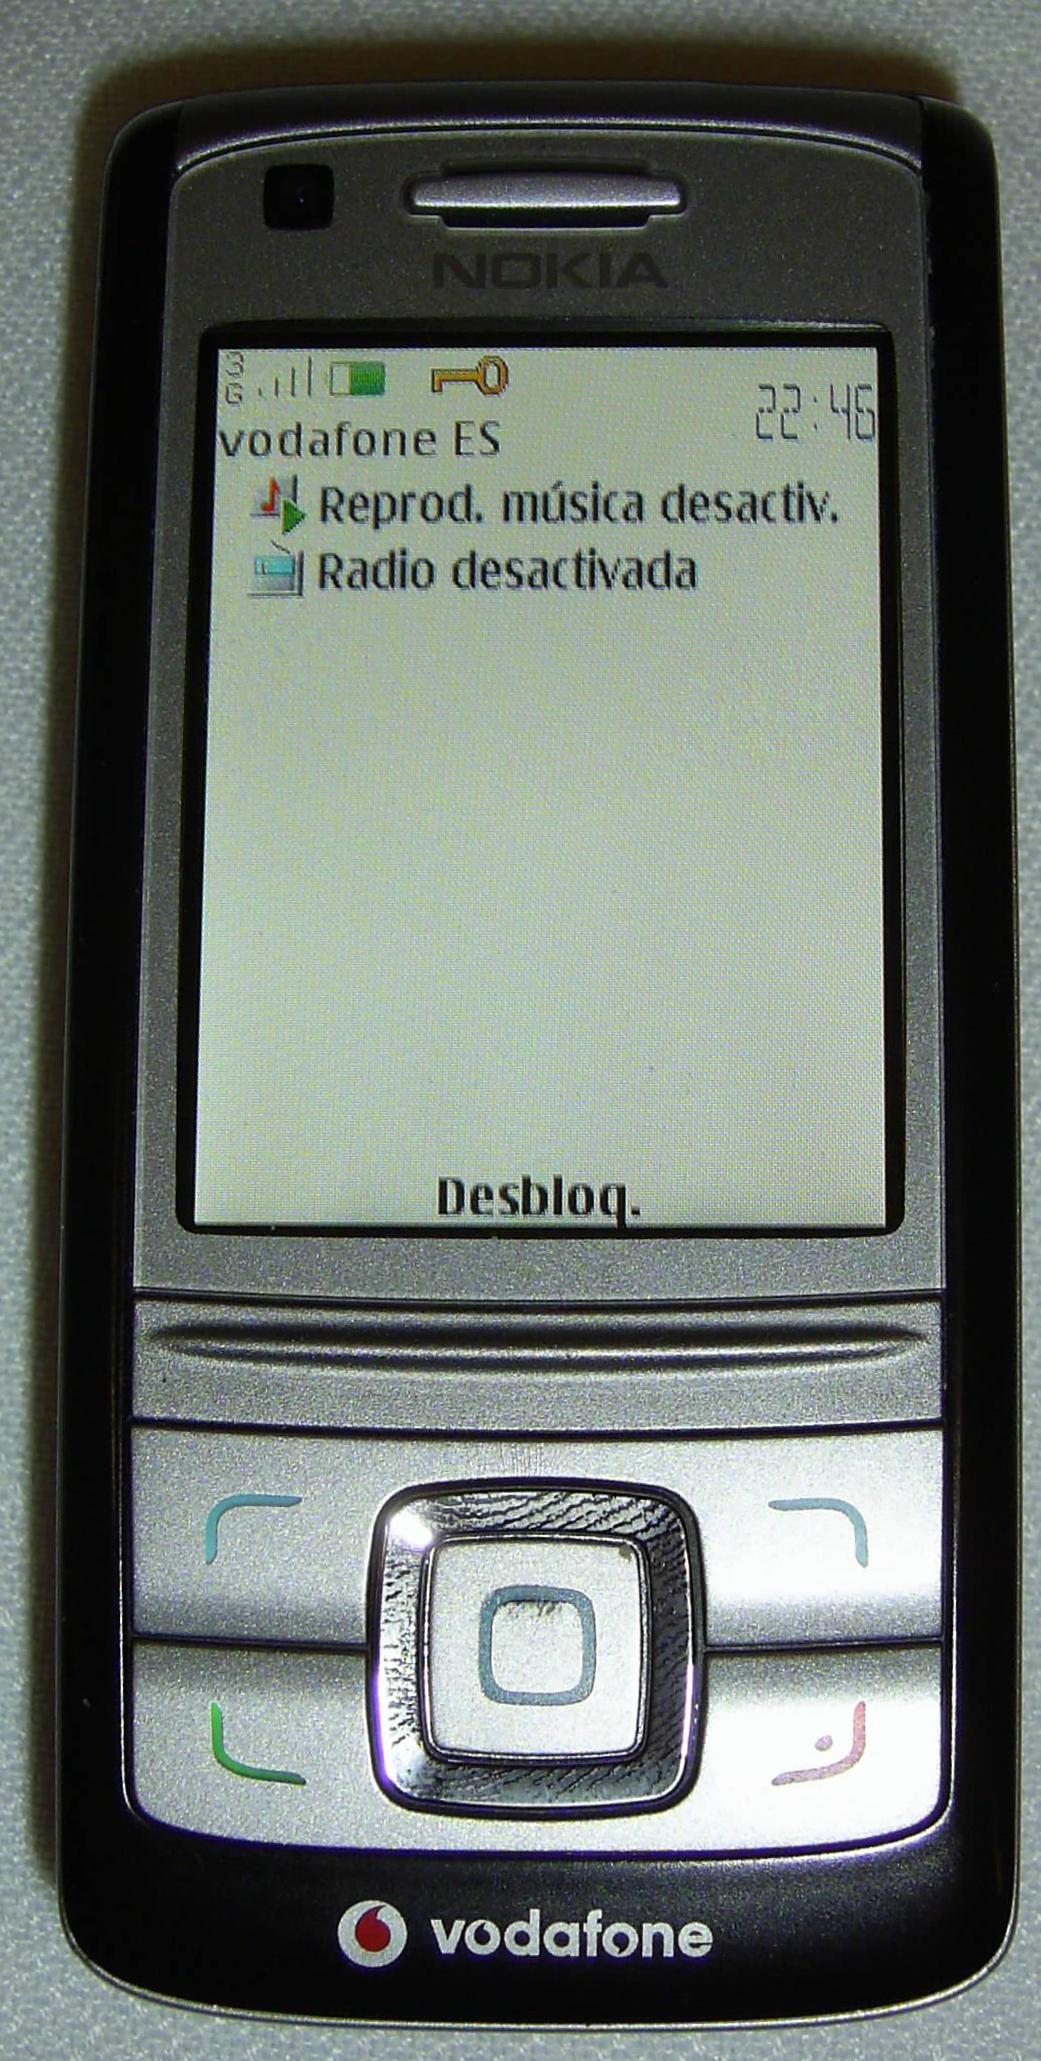 Nokia 100 unlock code free uk phone